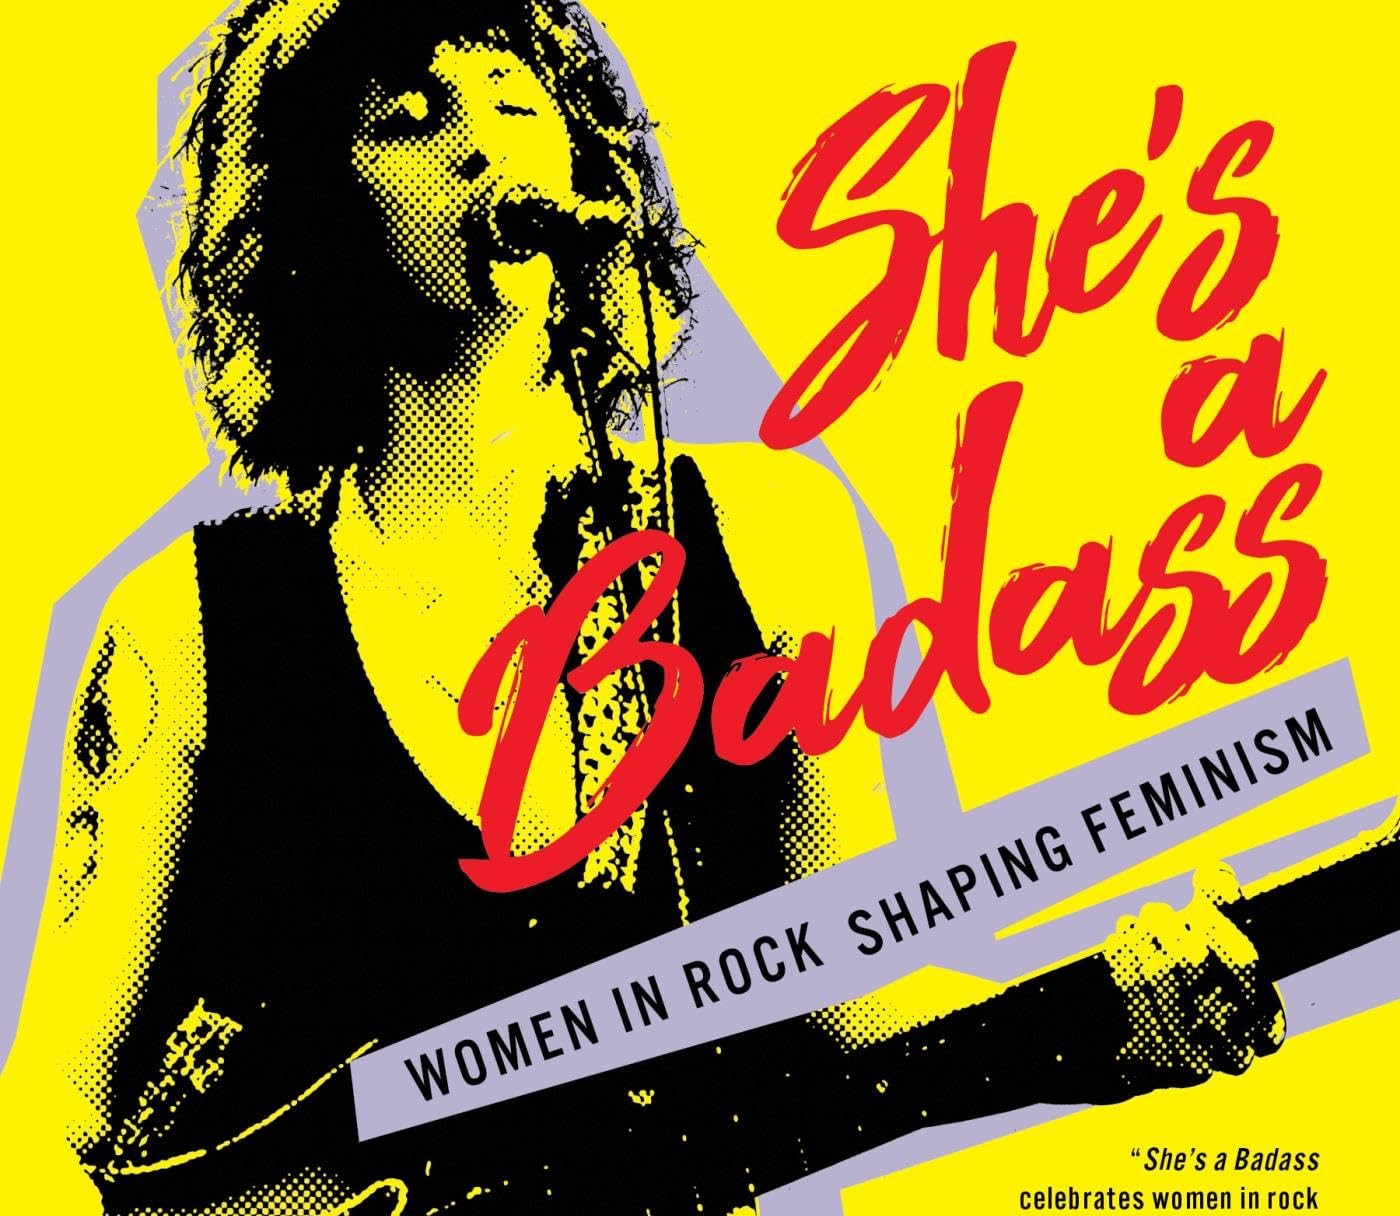 Katherine Yeske Taylor's 'She's A Badass: Women In Rock Shaping